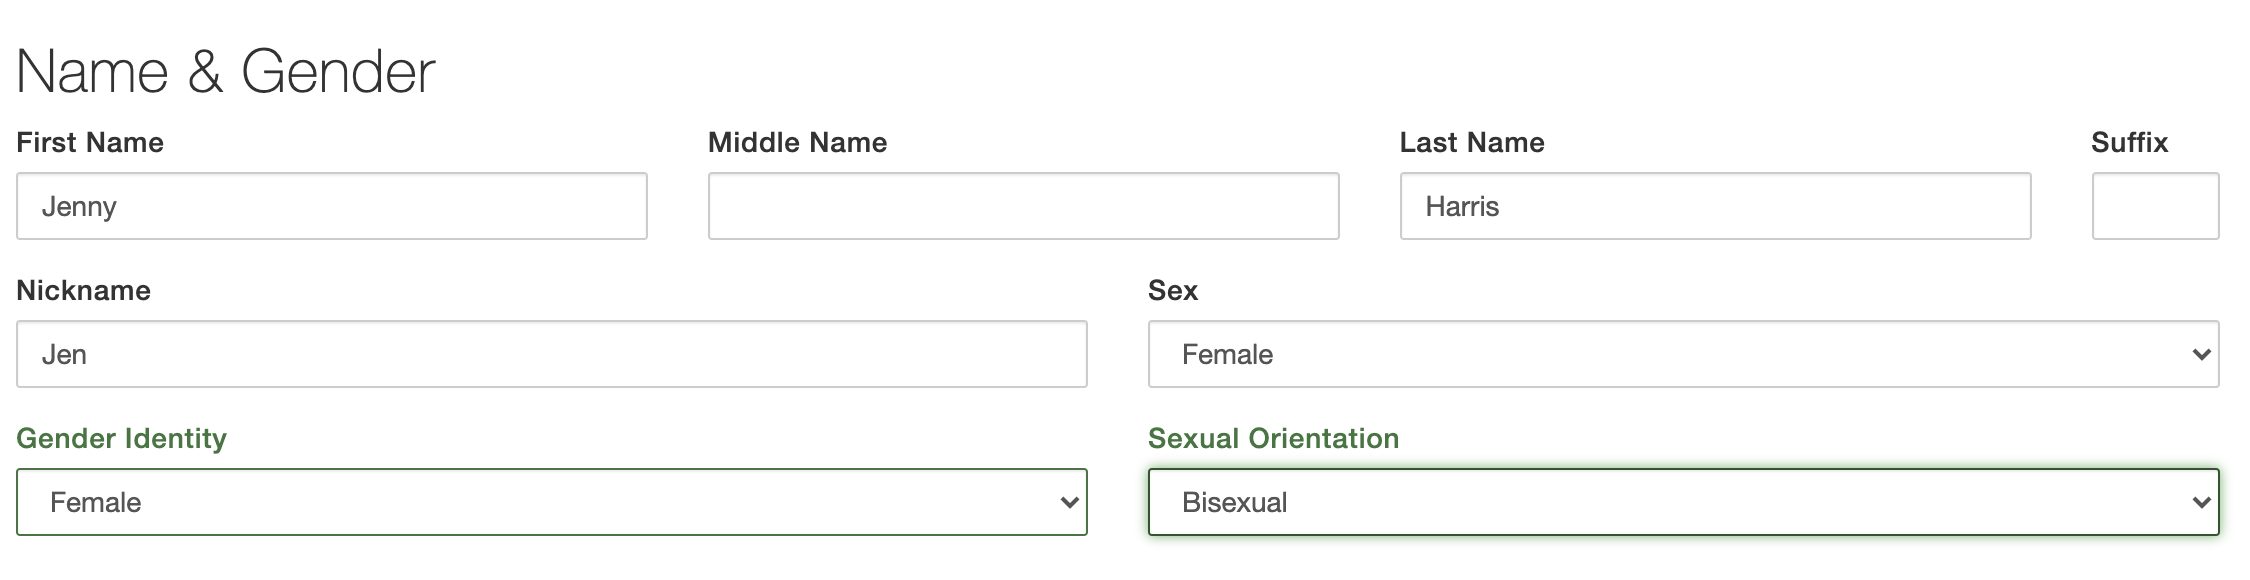 Onpatient_Gender_and_Sexual_Orientation.png